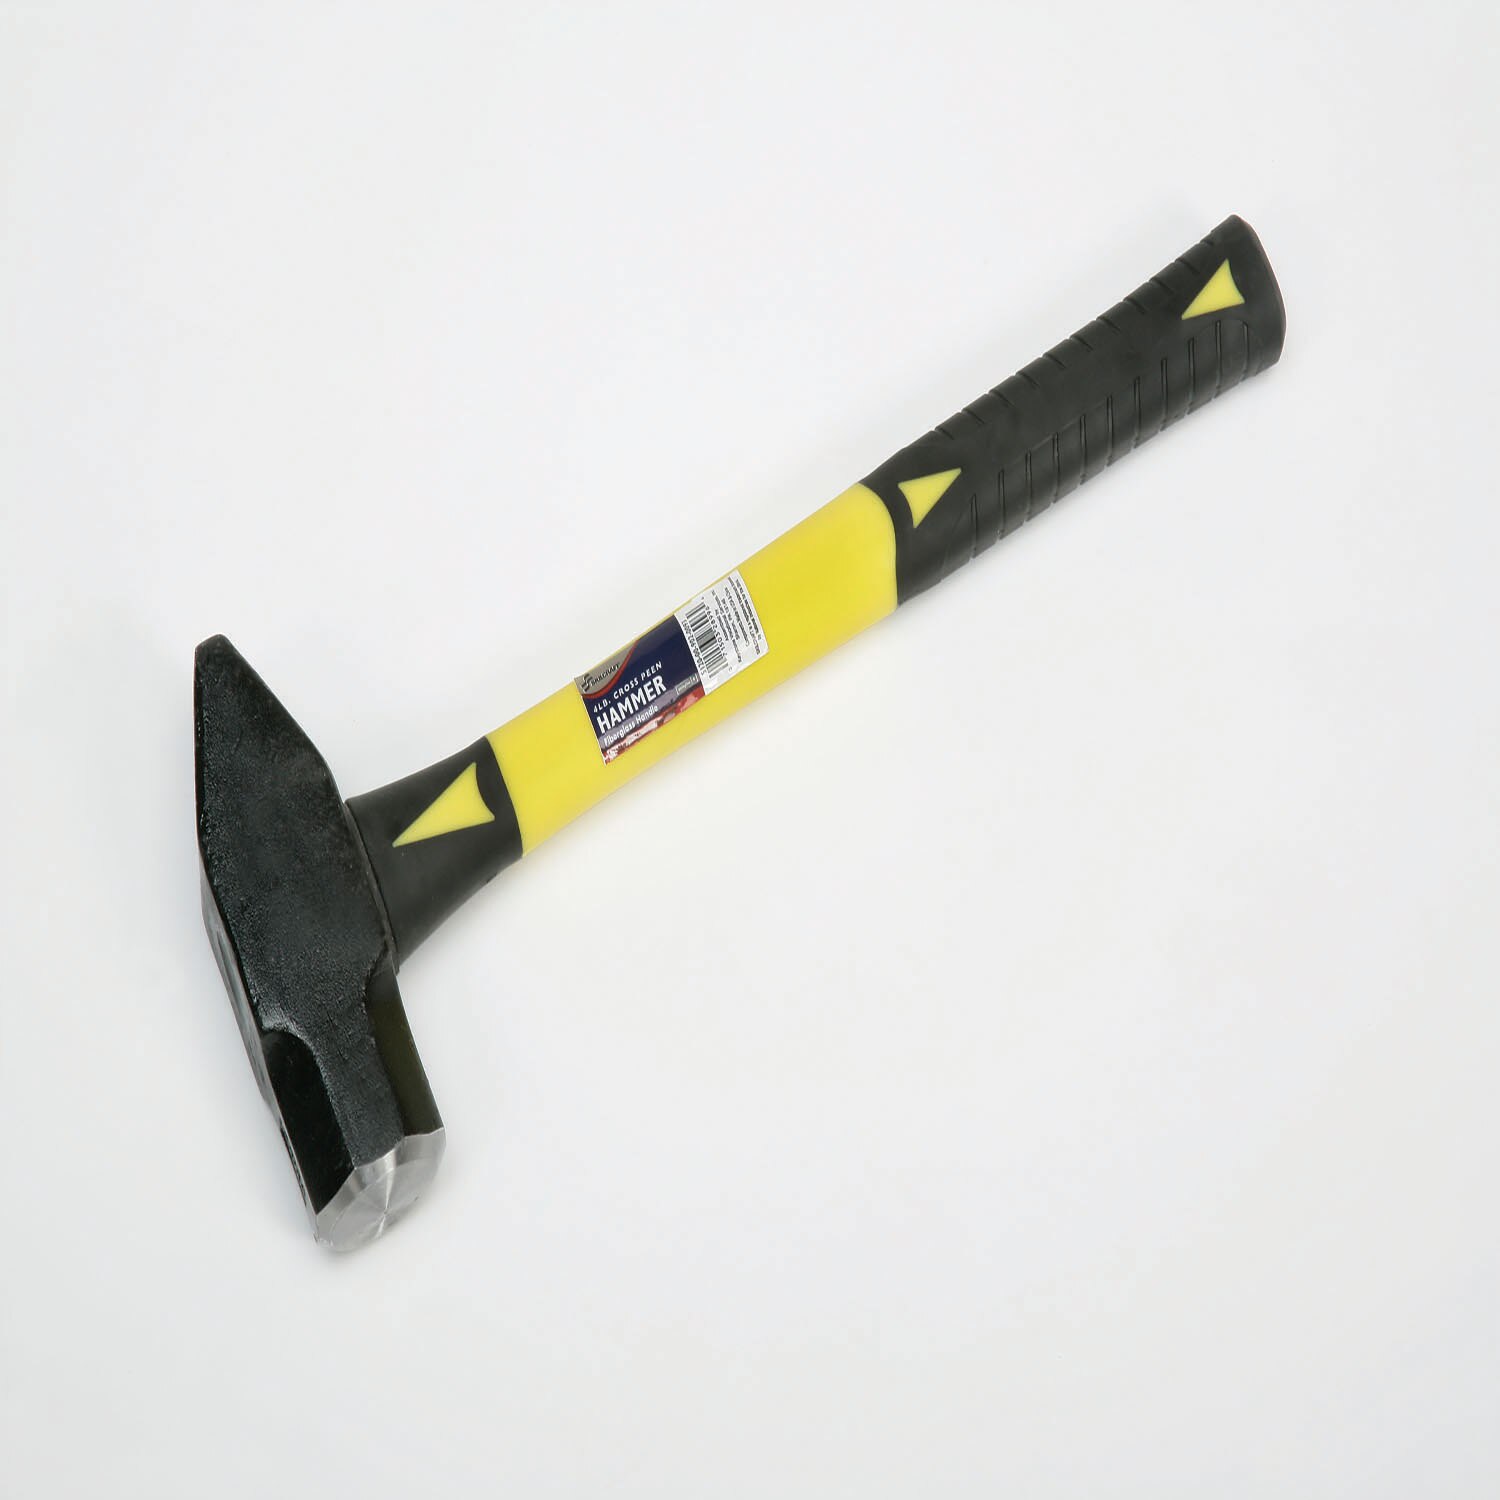 Hammer - 4 lb, Cross-Peen, 16" Fiberglass Handle, Cushioned Grip